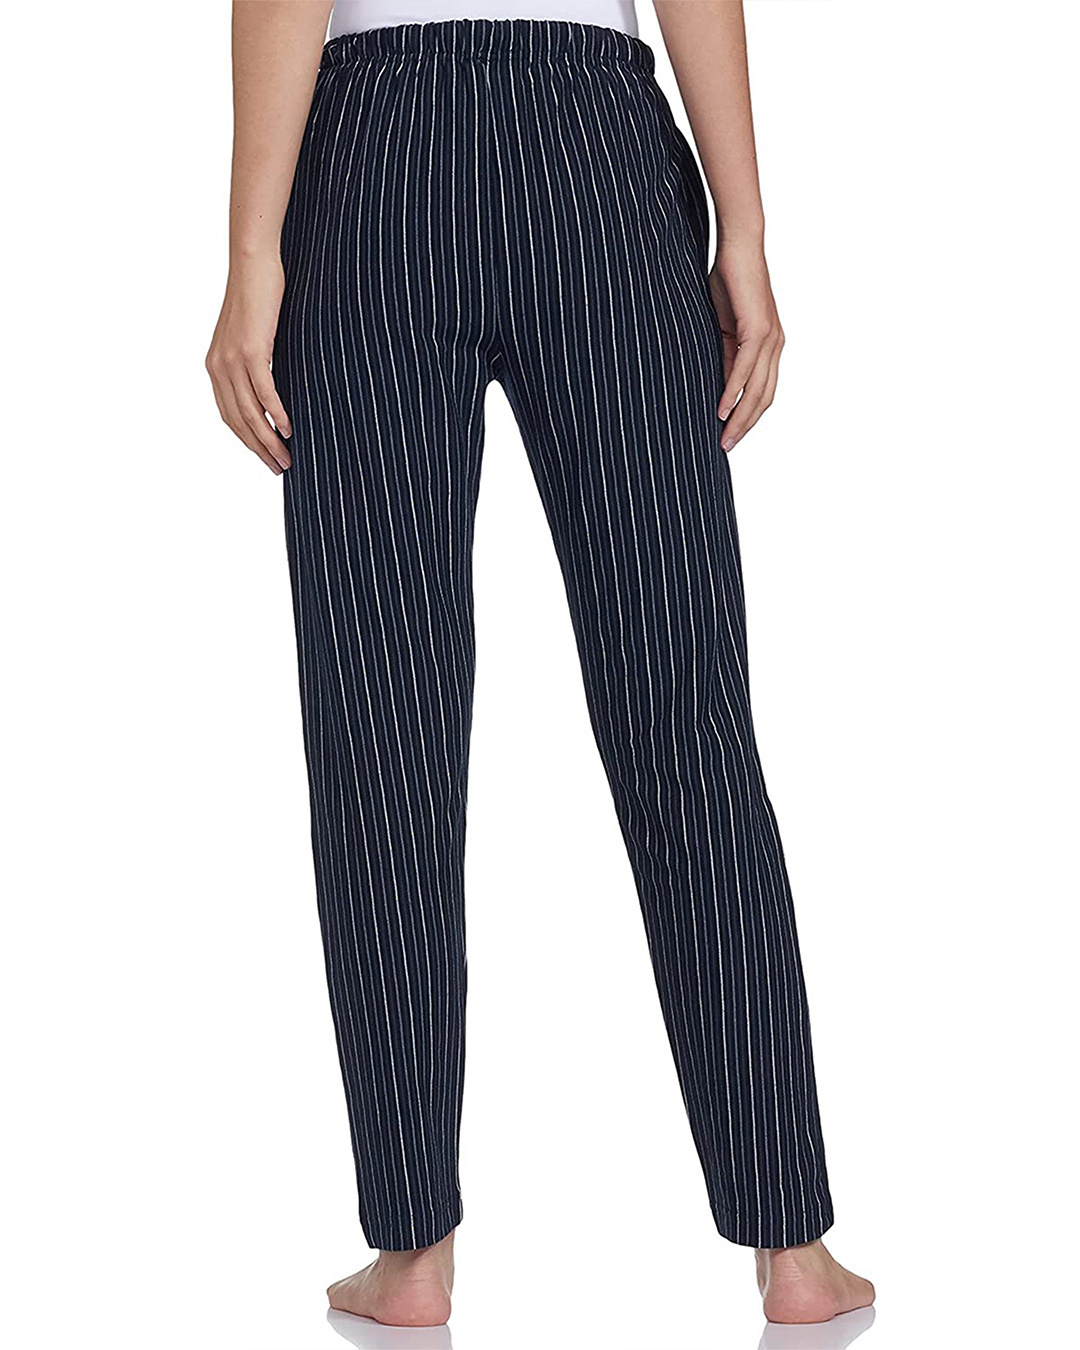 Shop Women's Blue Striped Cotton Pyjamas-Back